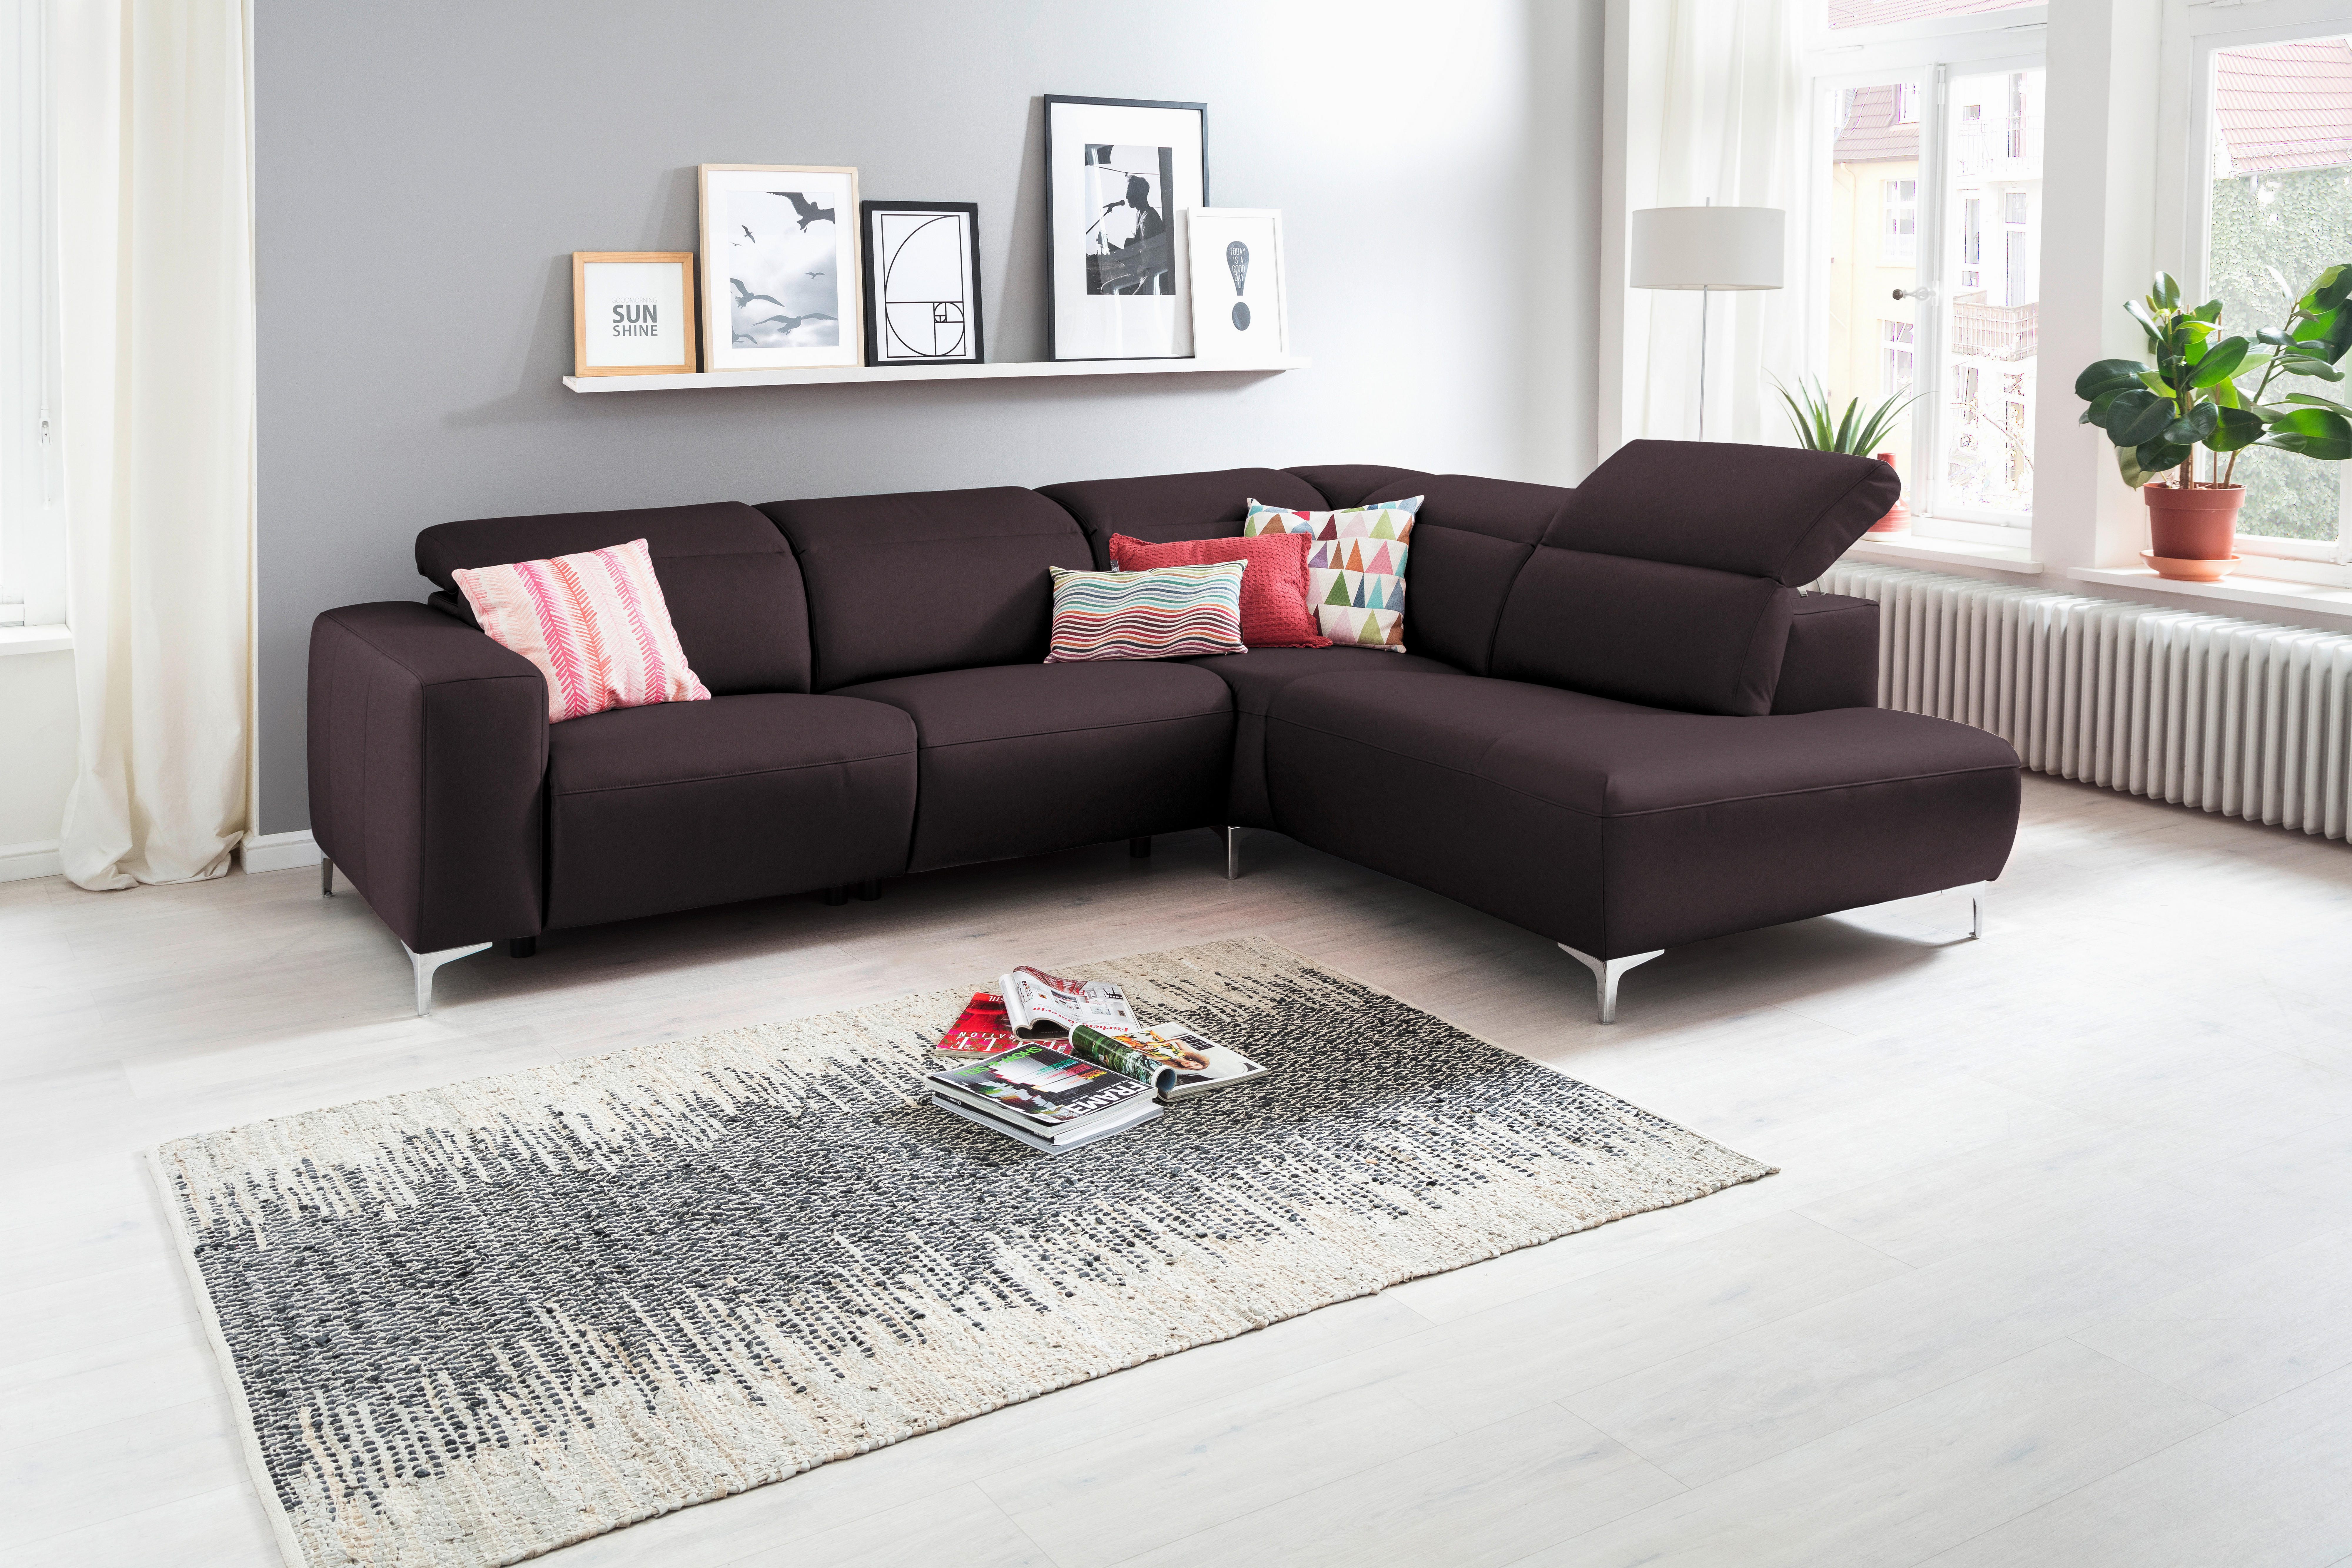 ECKSOFA in Echtleder Braun  - Chromfarben/Braun, Design, Leder/Metall (290/223cm) - Pure Home Lifestyle